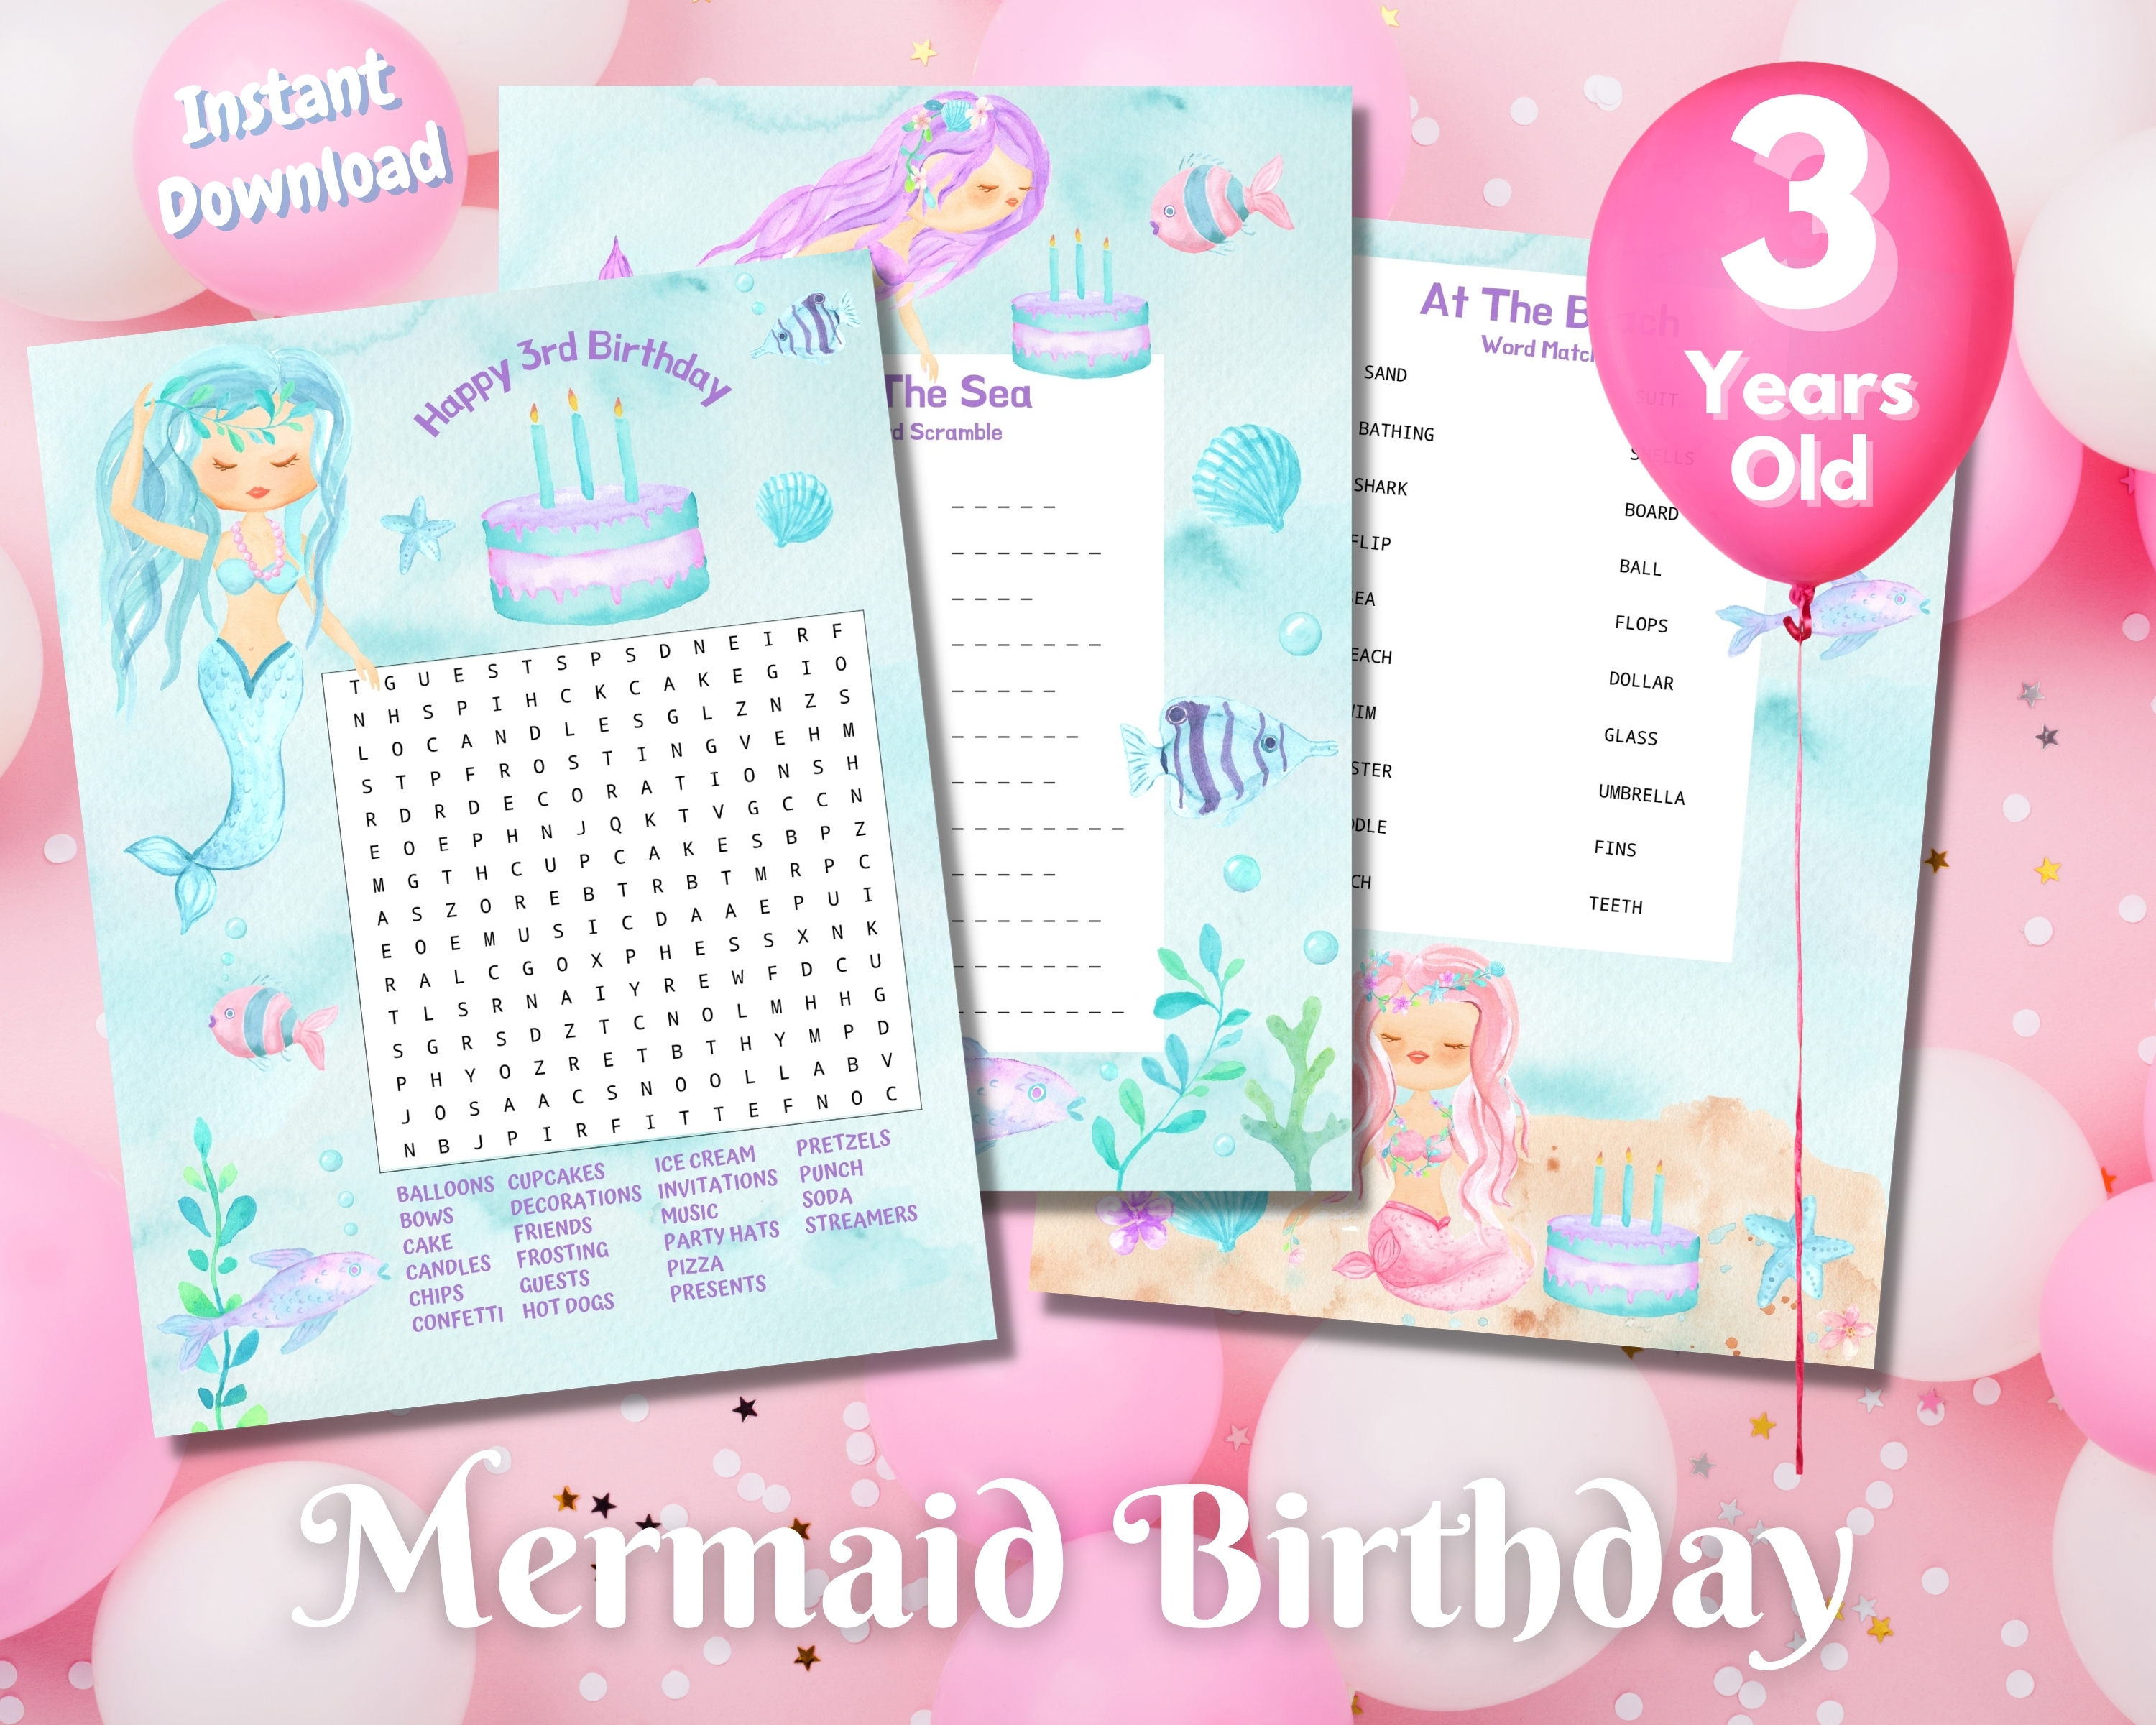 Third Mermaid Birthday Word Puzzles - Light Complexion